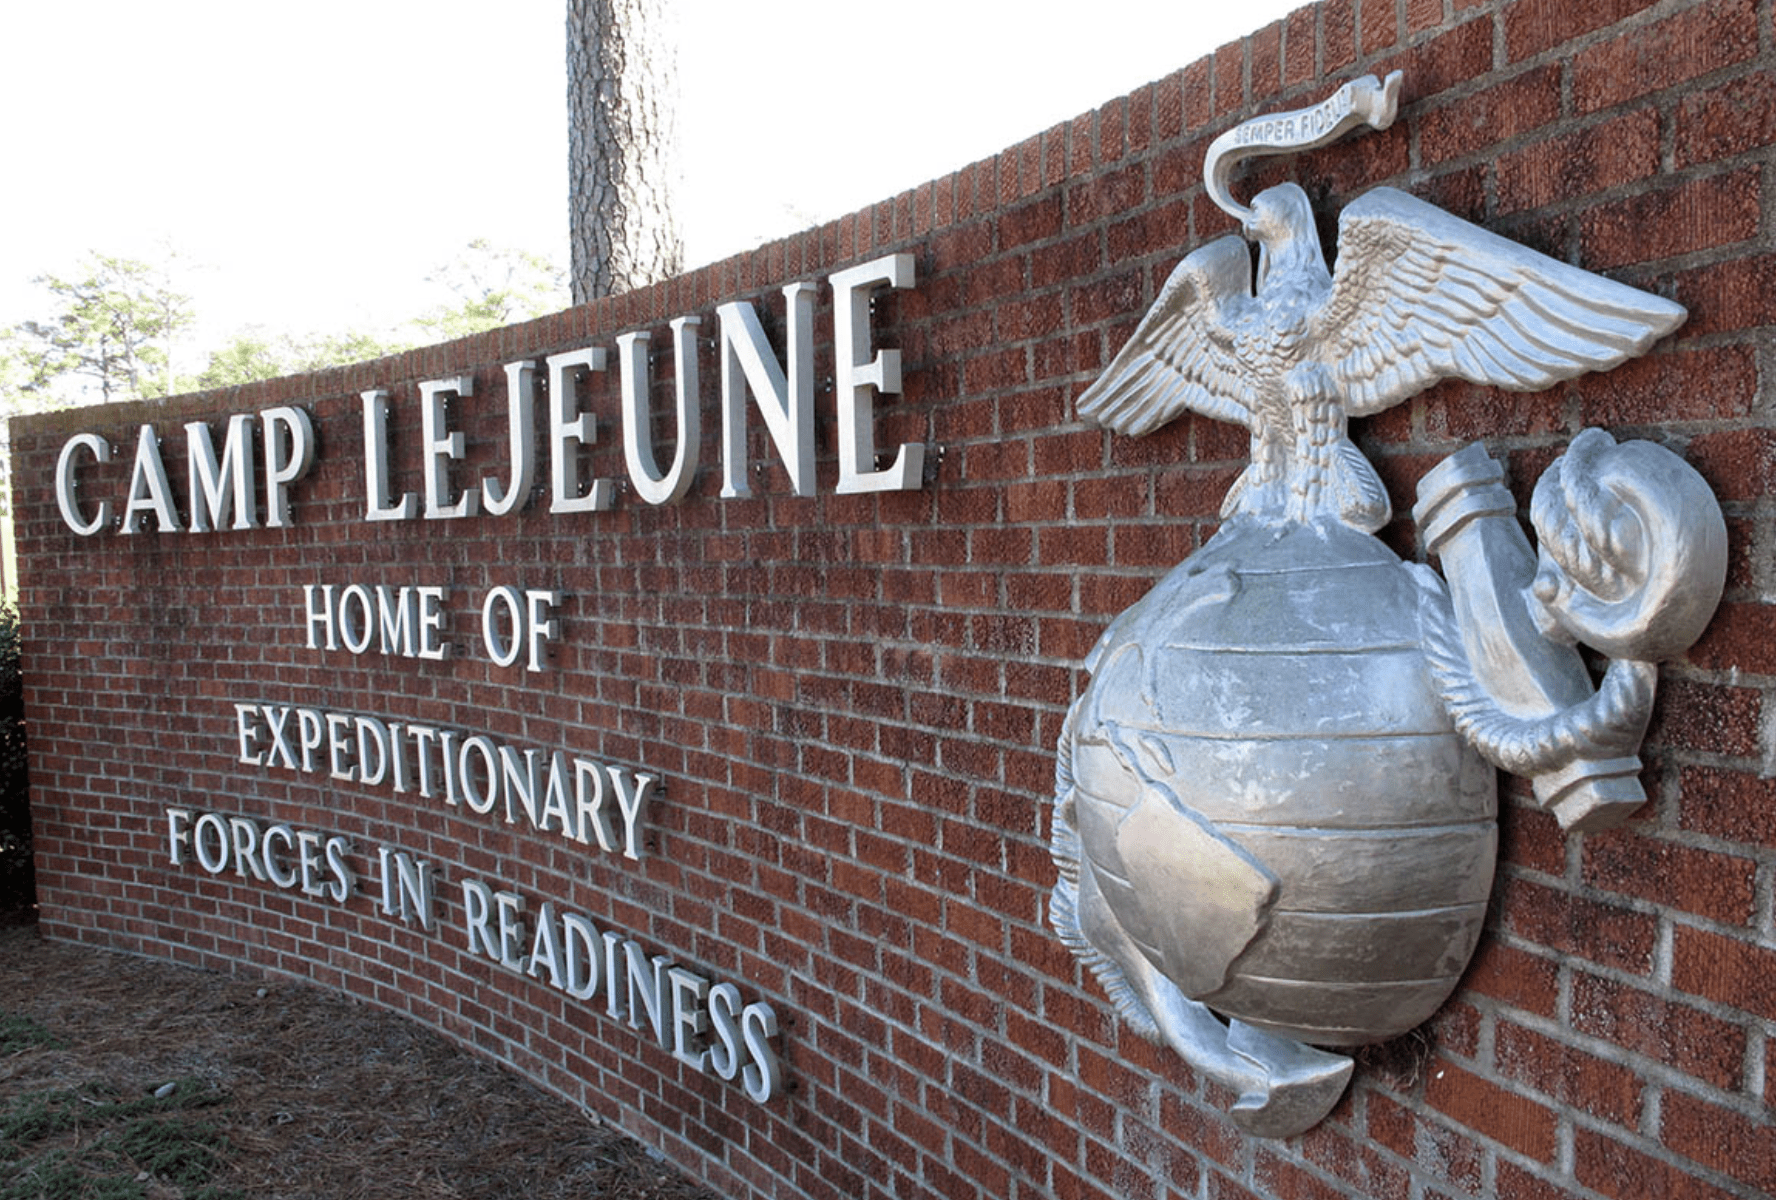 The entrance to Marine Corps Base Camp Lejeune in North Carolina.